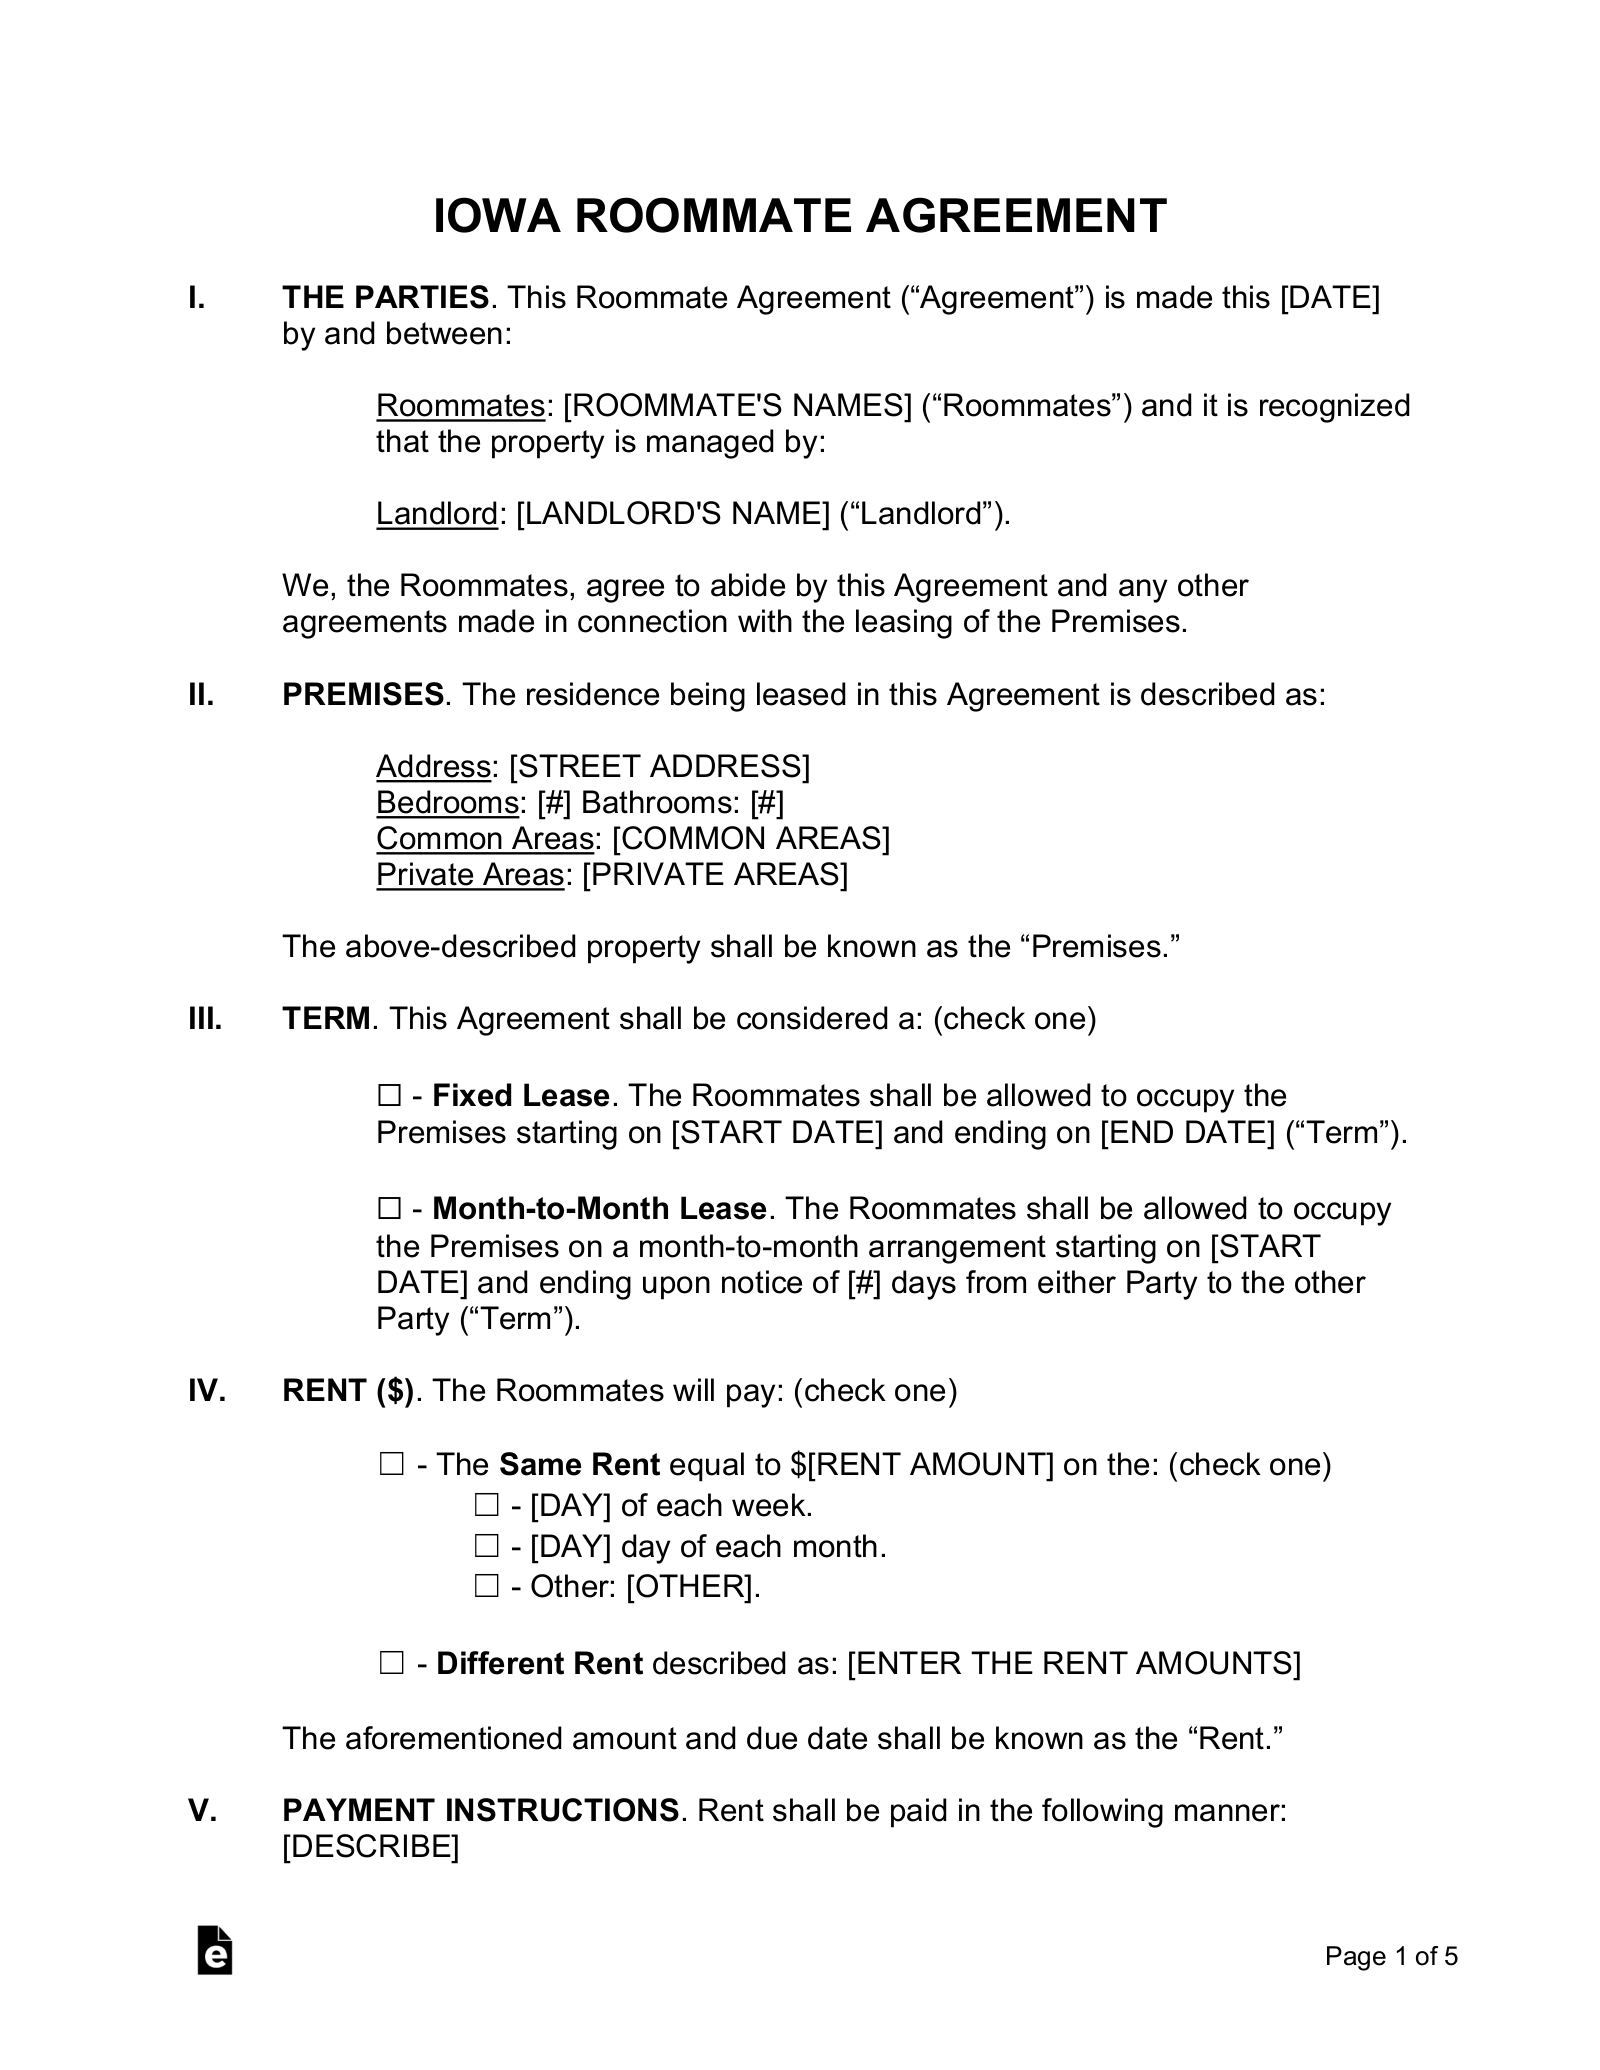 free iowa roommate room rental agreement form pdf word eforms